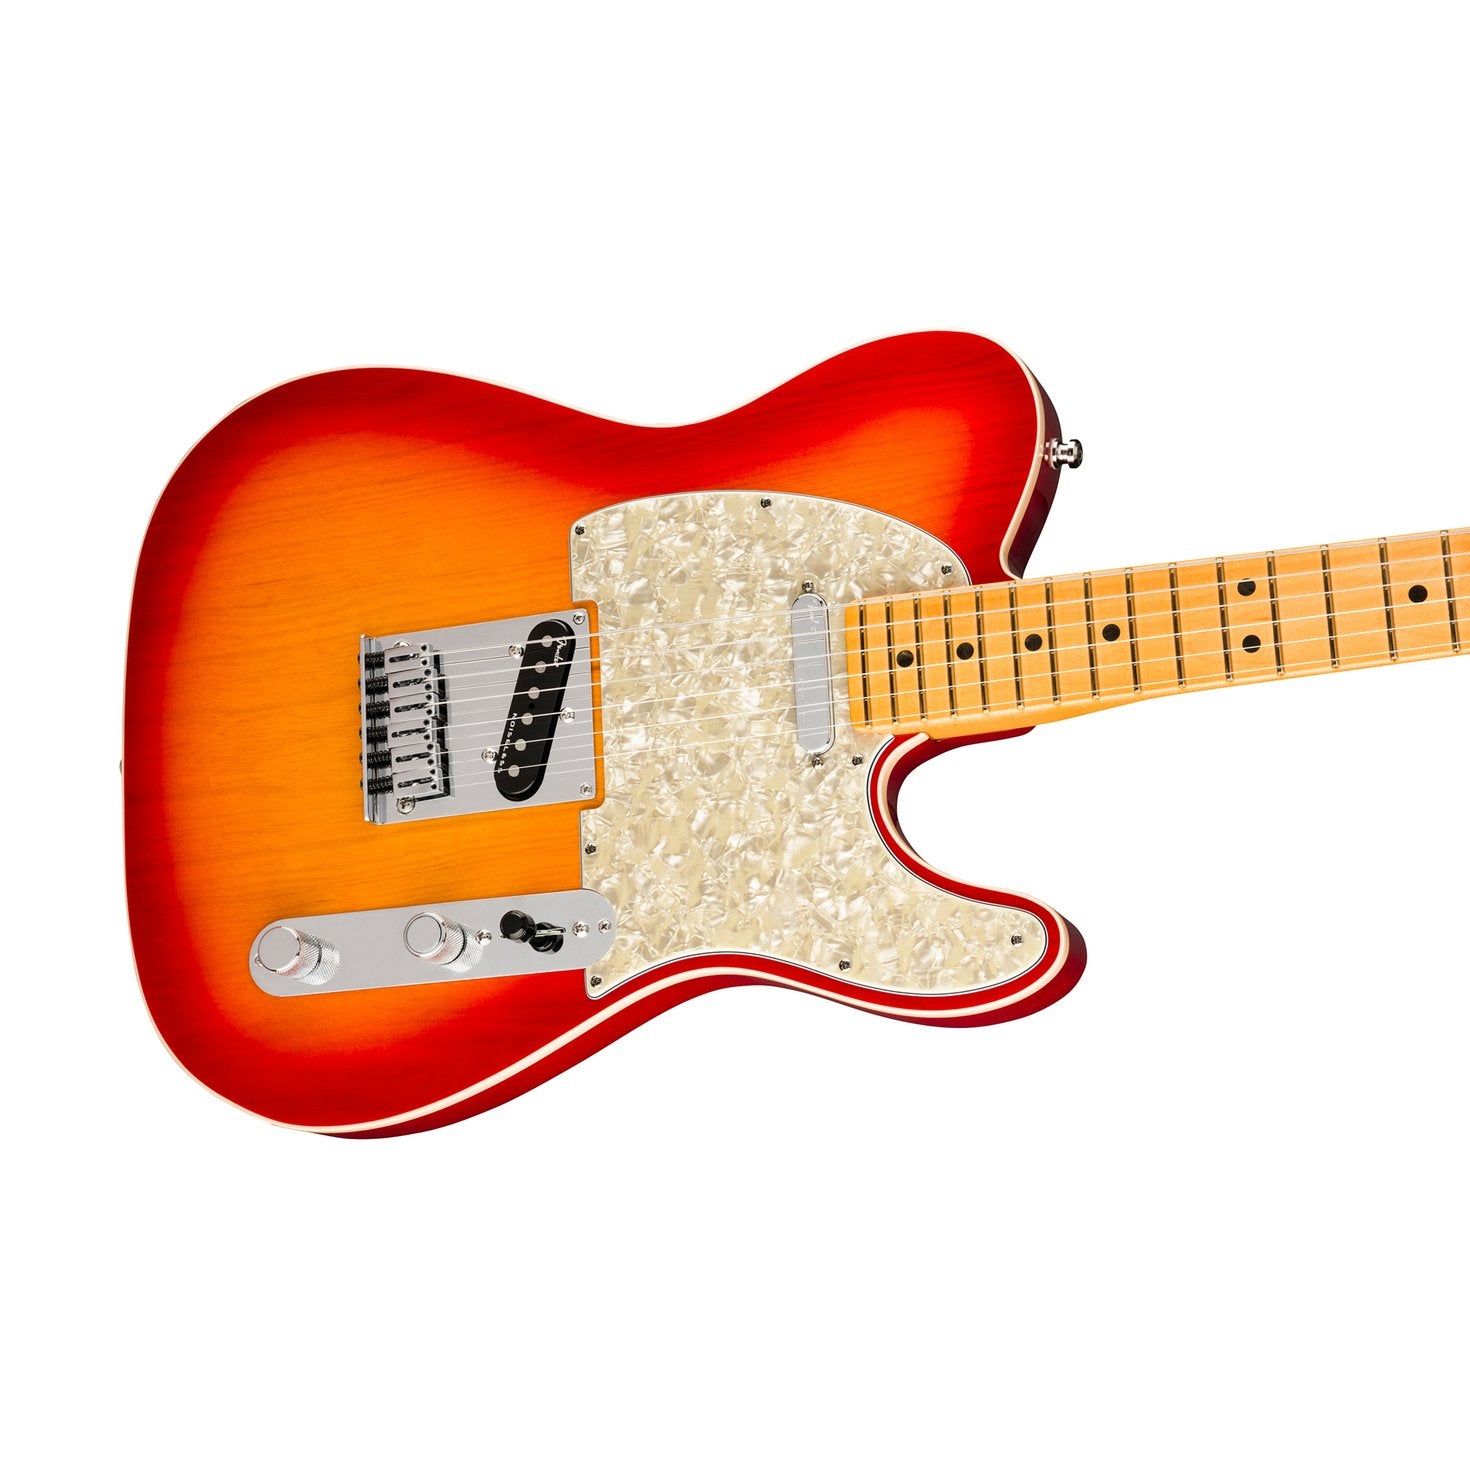 Fender American Ultra Telecaster Electric Guitar, Maple FB, Plasma Red Burst, FENDER, ELECTRIC GUITAR, fender-electric-guitar-f03-011-8032-773, ZOSO MUSIC SDN BHD